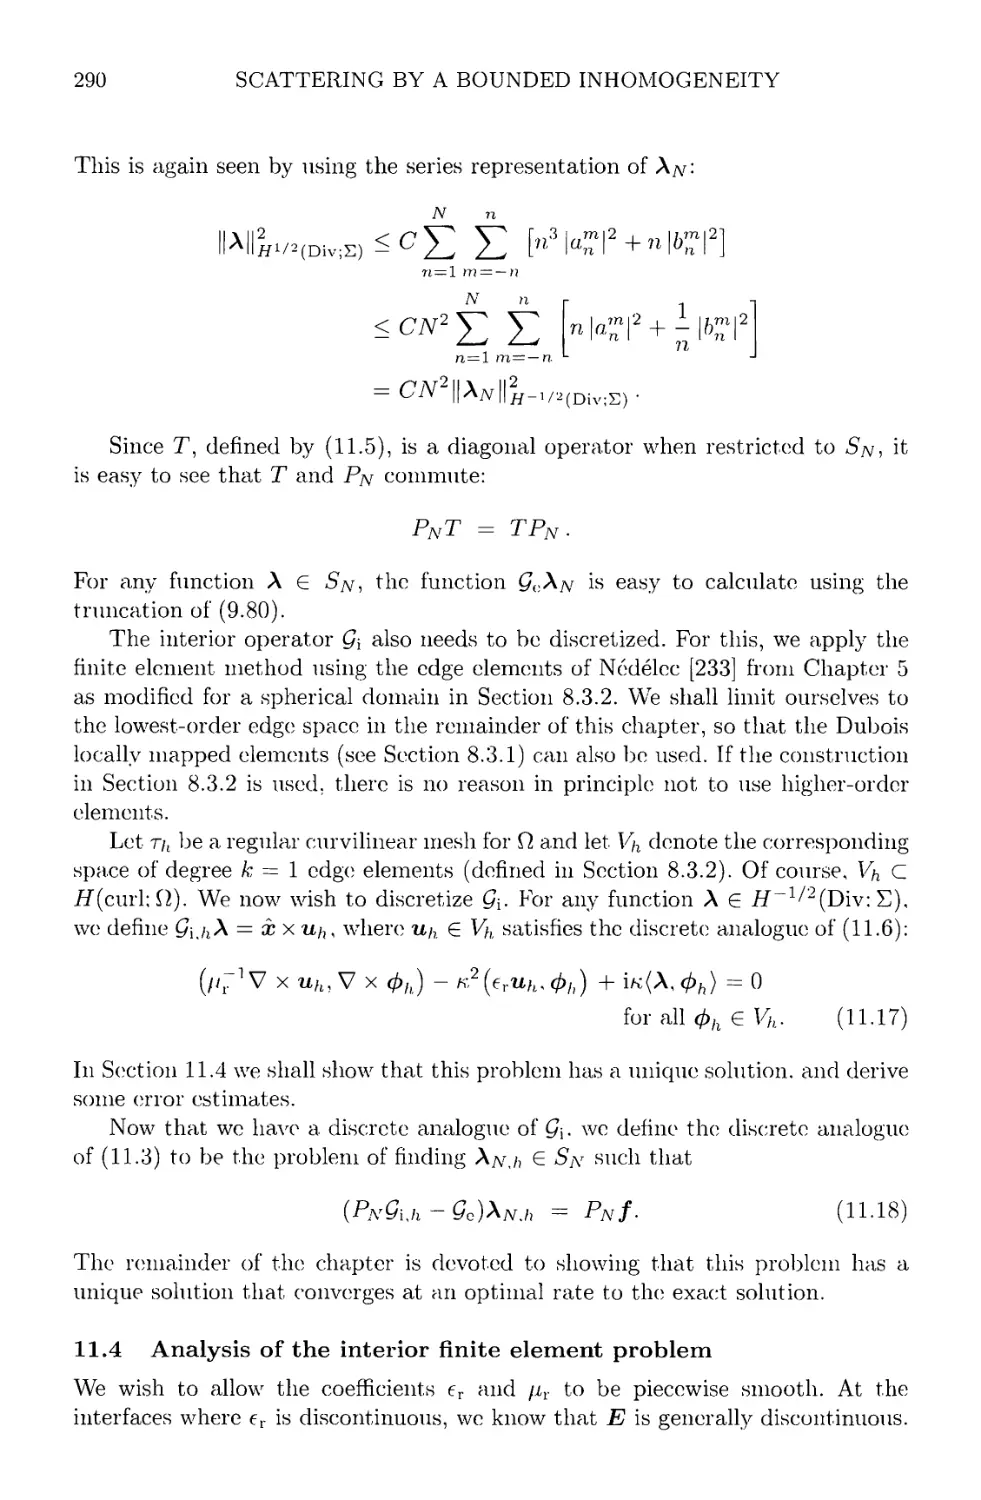 11.4 Analysis of the interior finite element problem